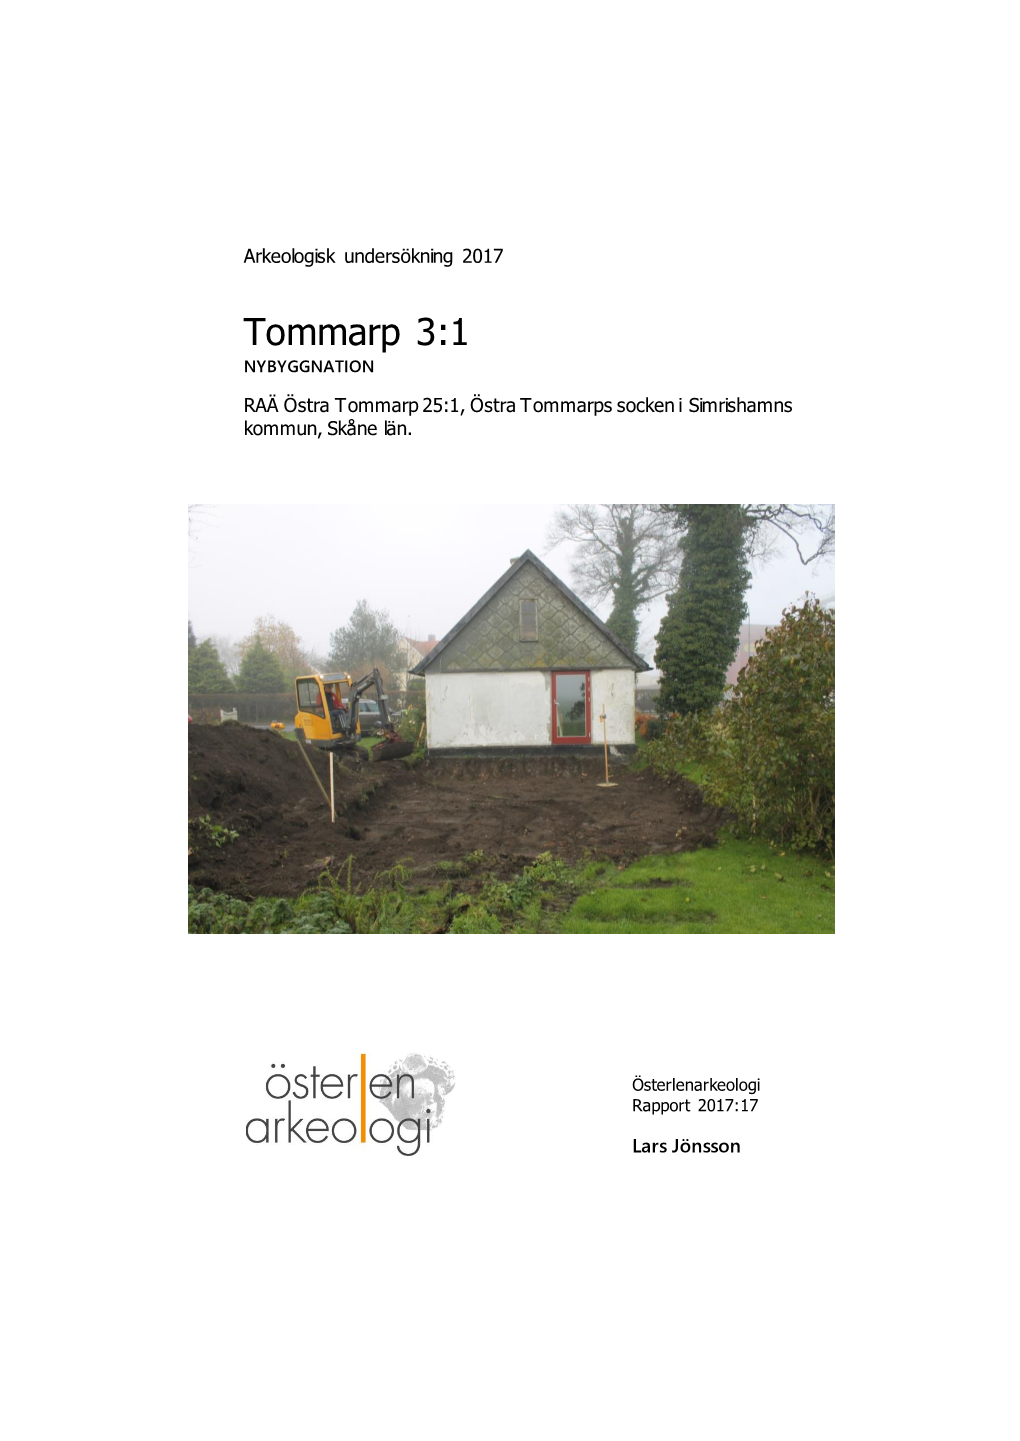 Rapport Tommarp 3:1 ÖA170016